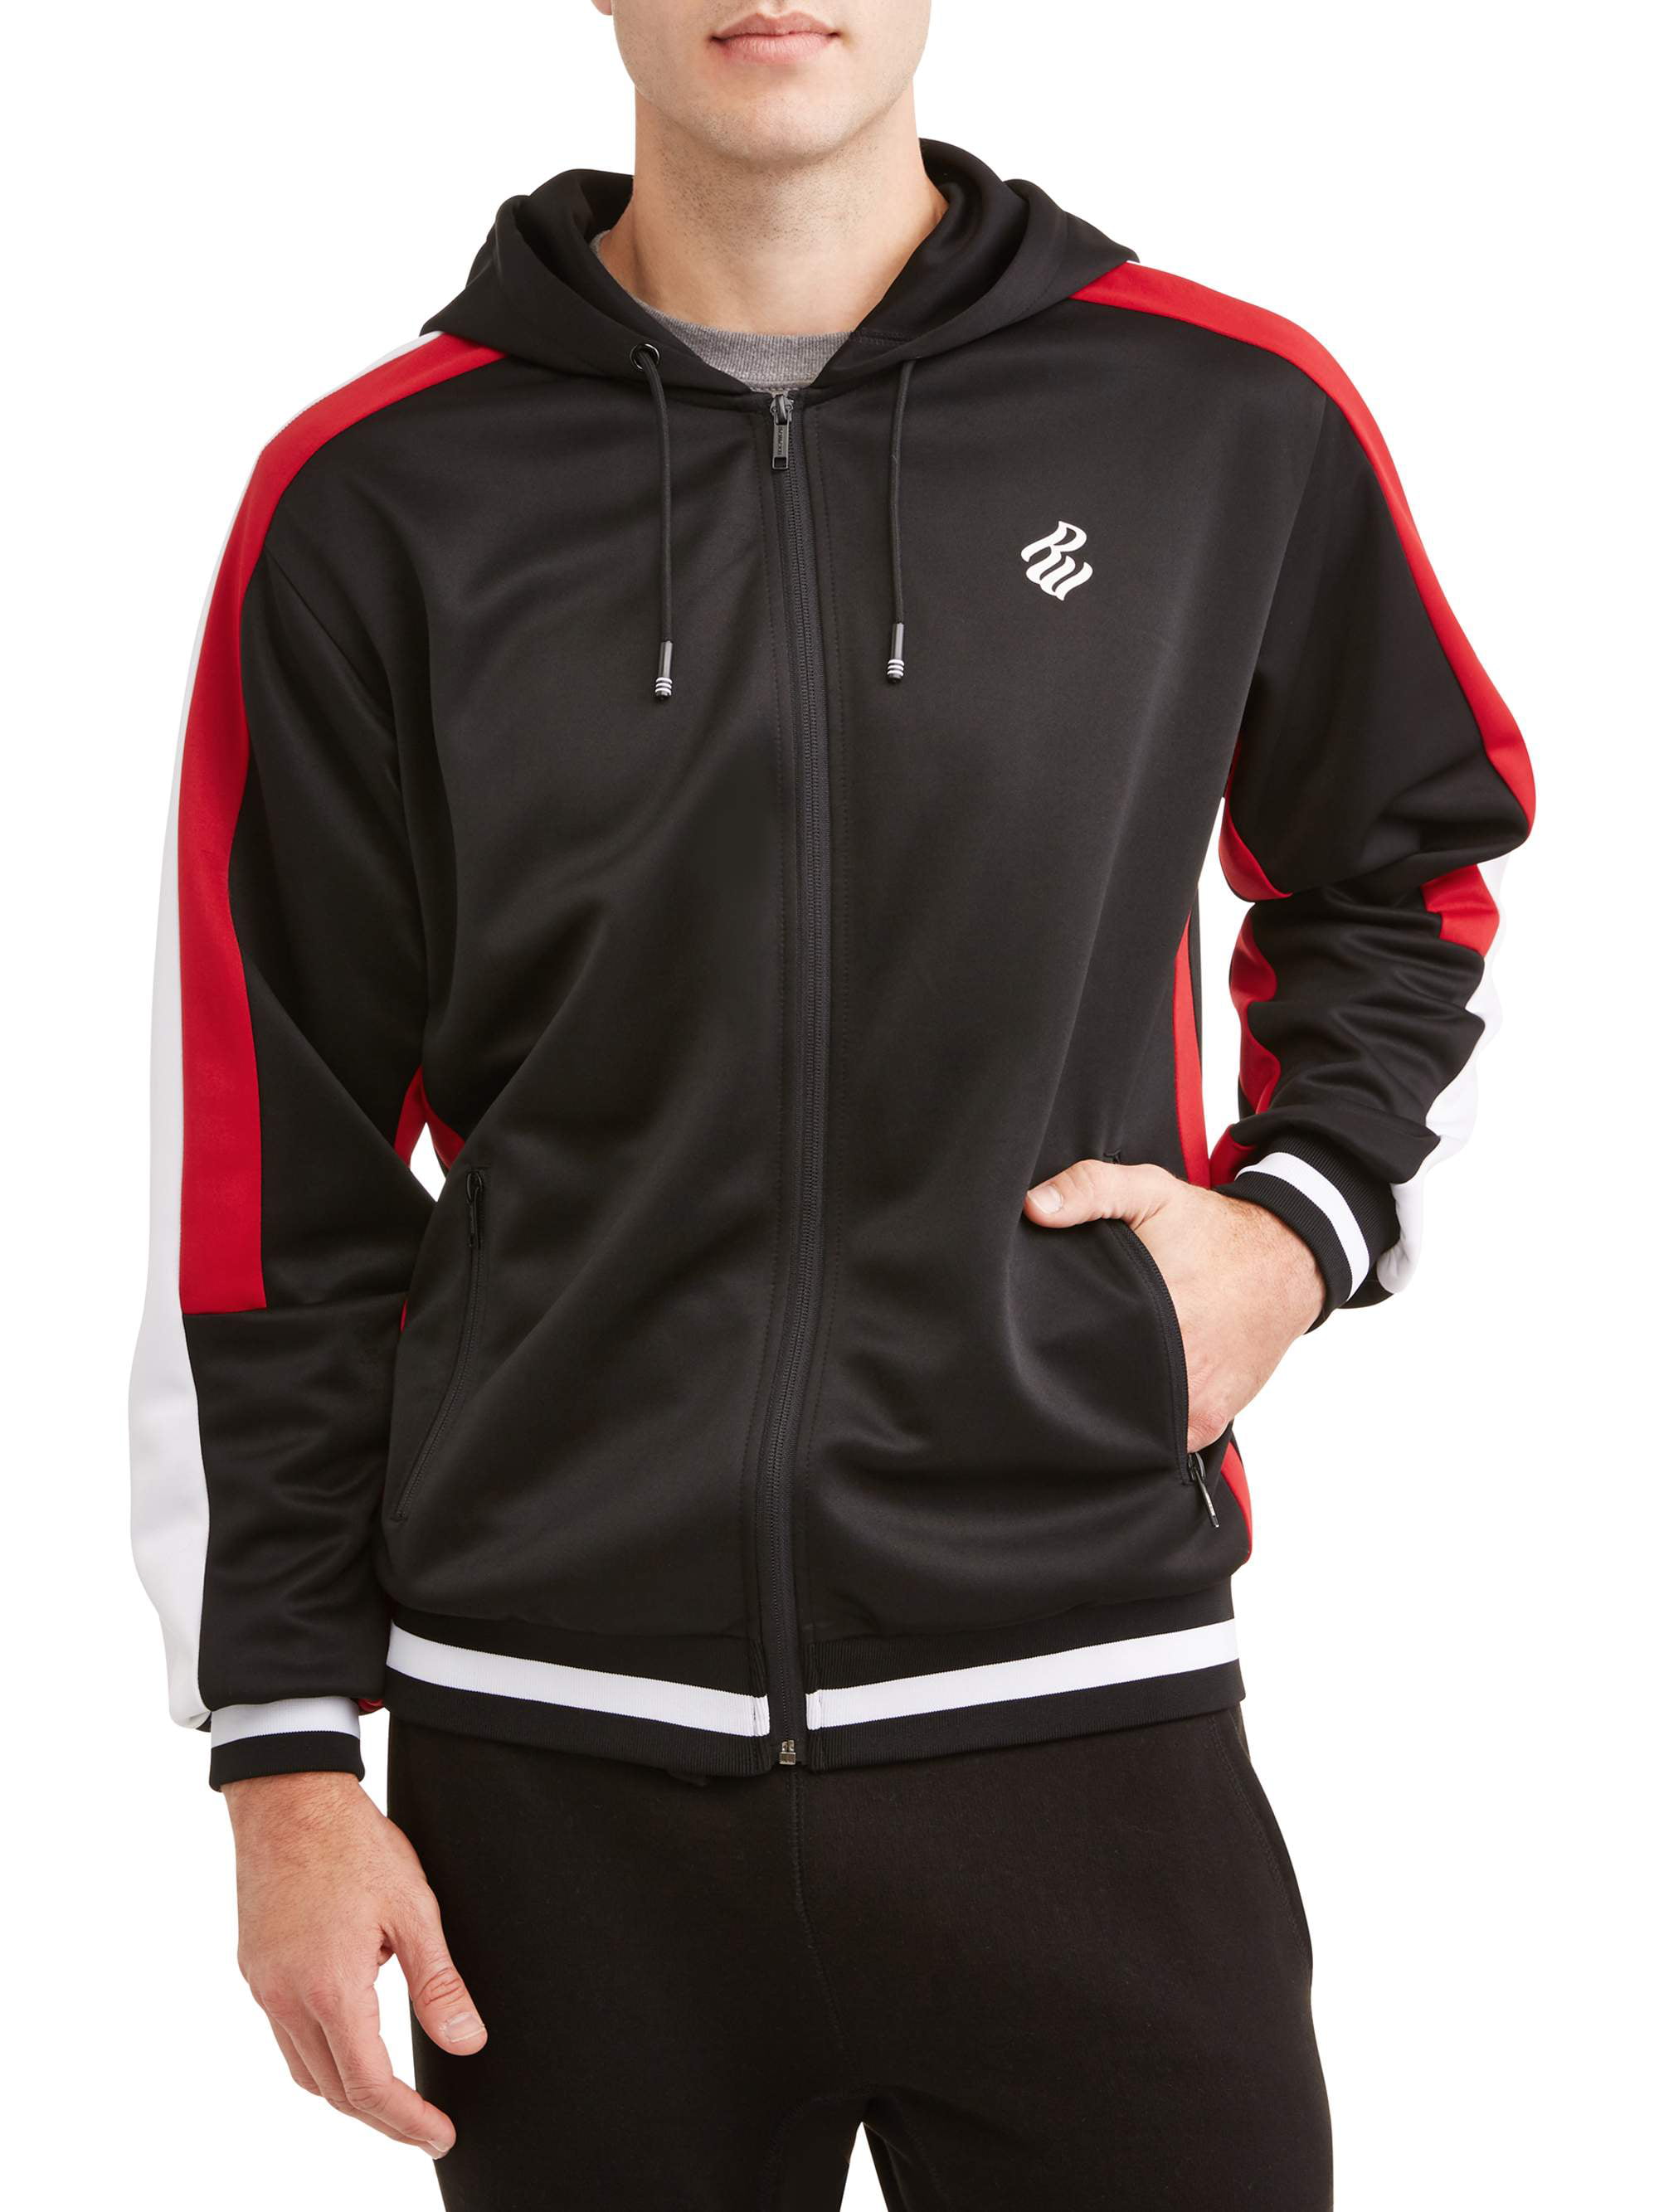 Rocawear Men's track jacket interlock, full zip hoodie